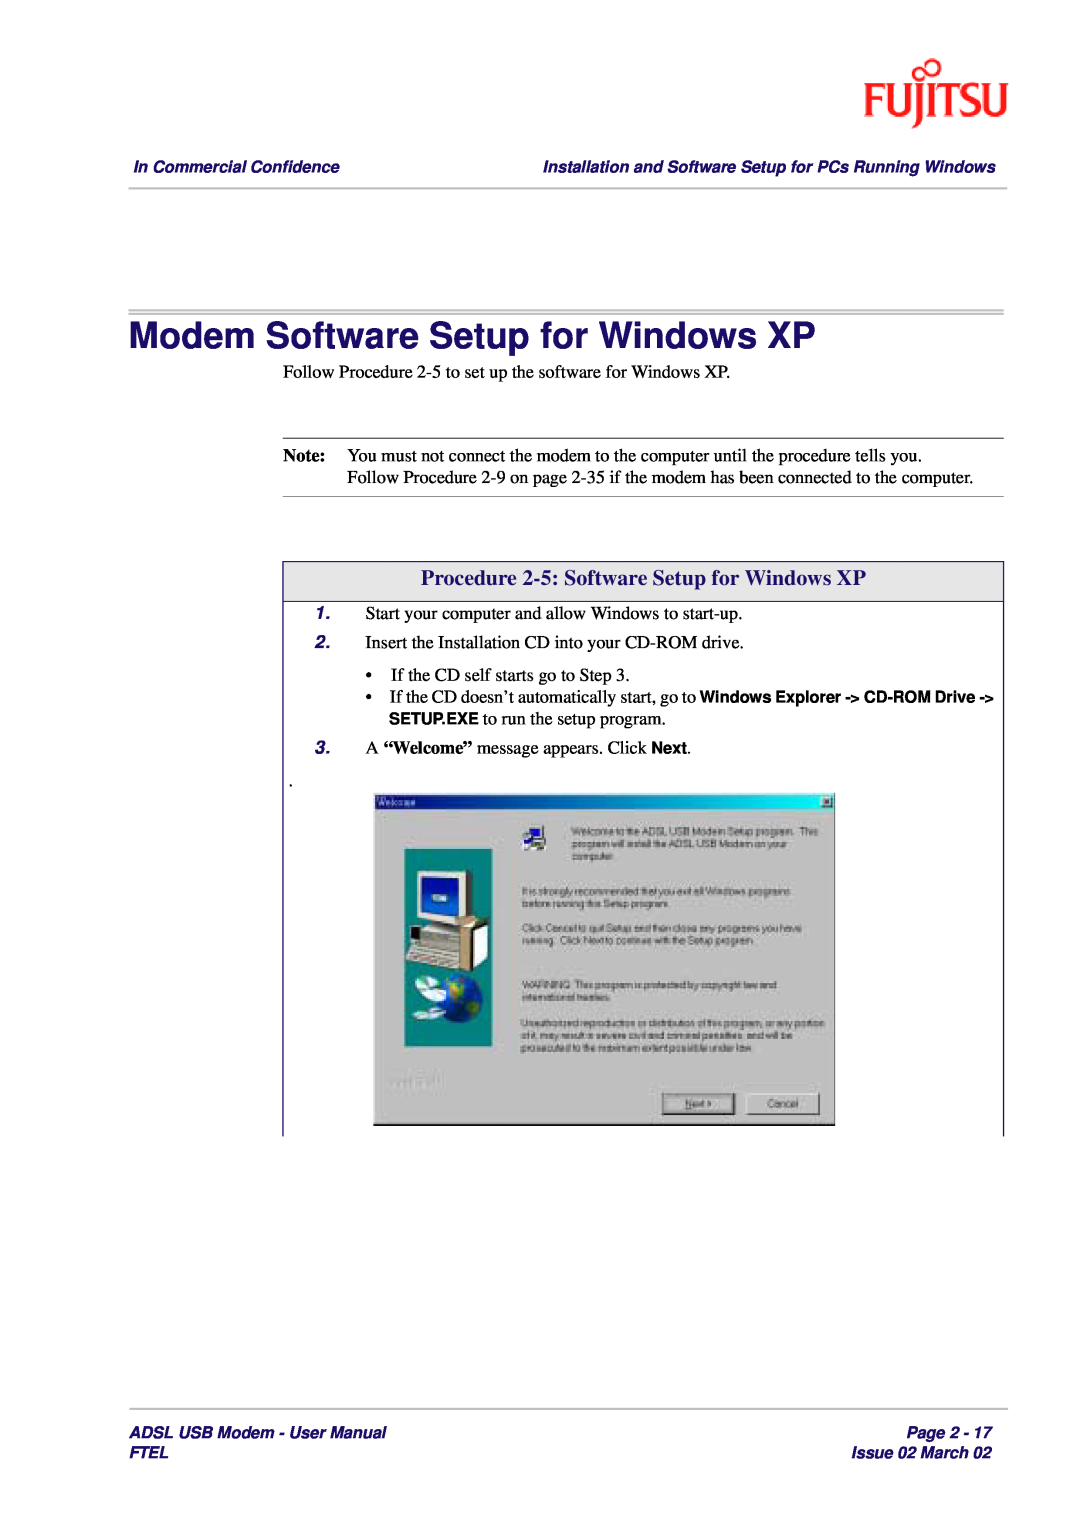 Fujitsu 3XAX-00803AAS user manual Modem Software Setup for Windows XP, Procedure 2-5 Software Setup for Windows XP 